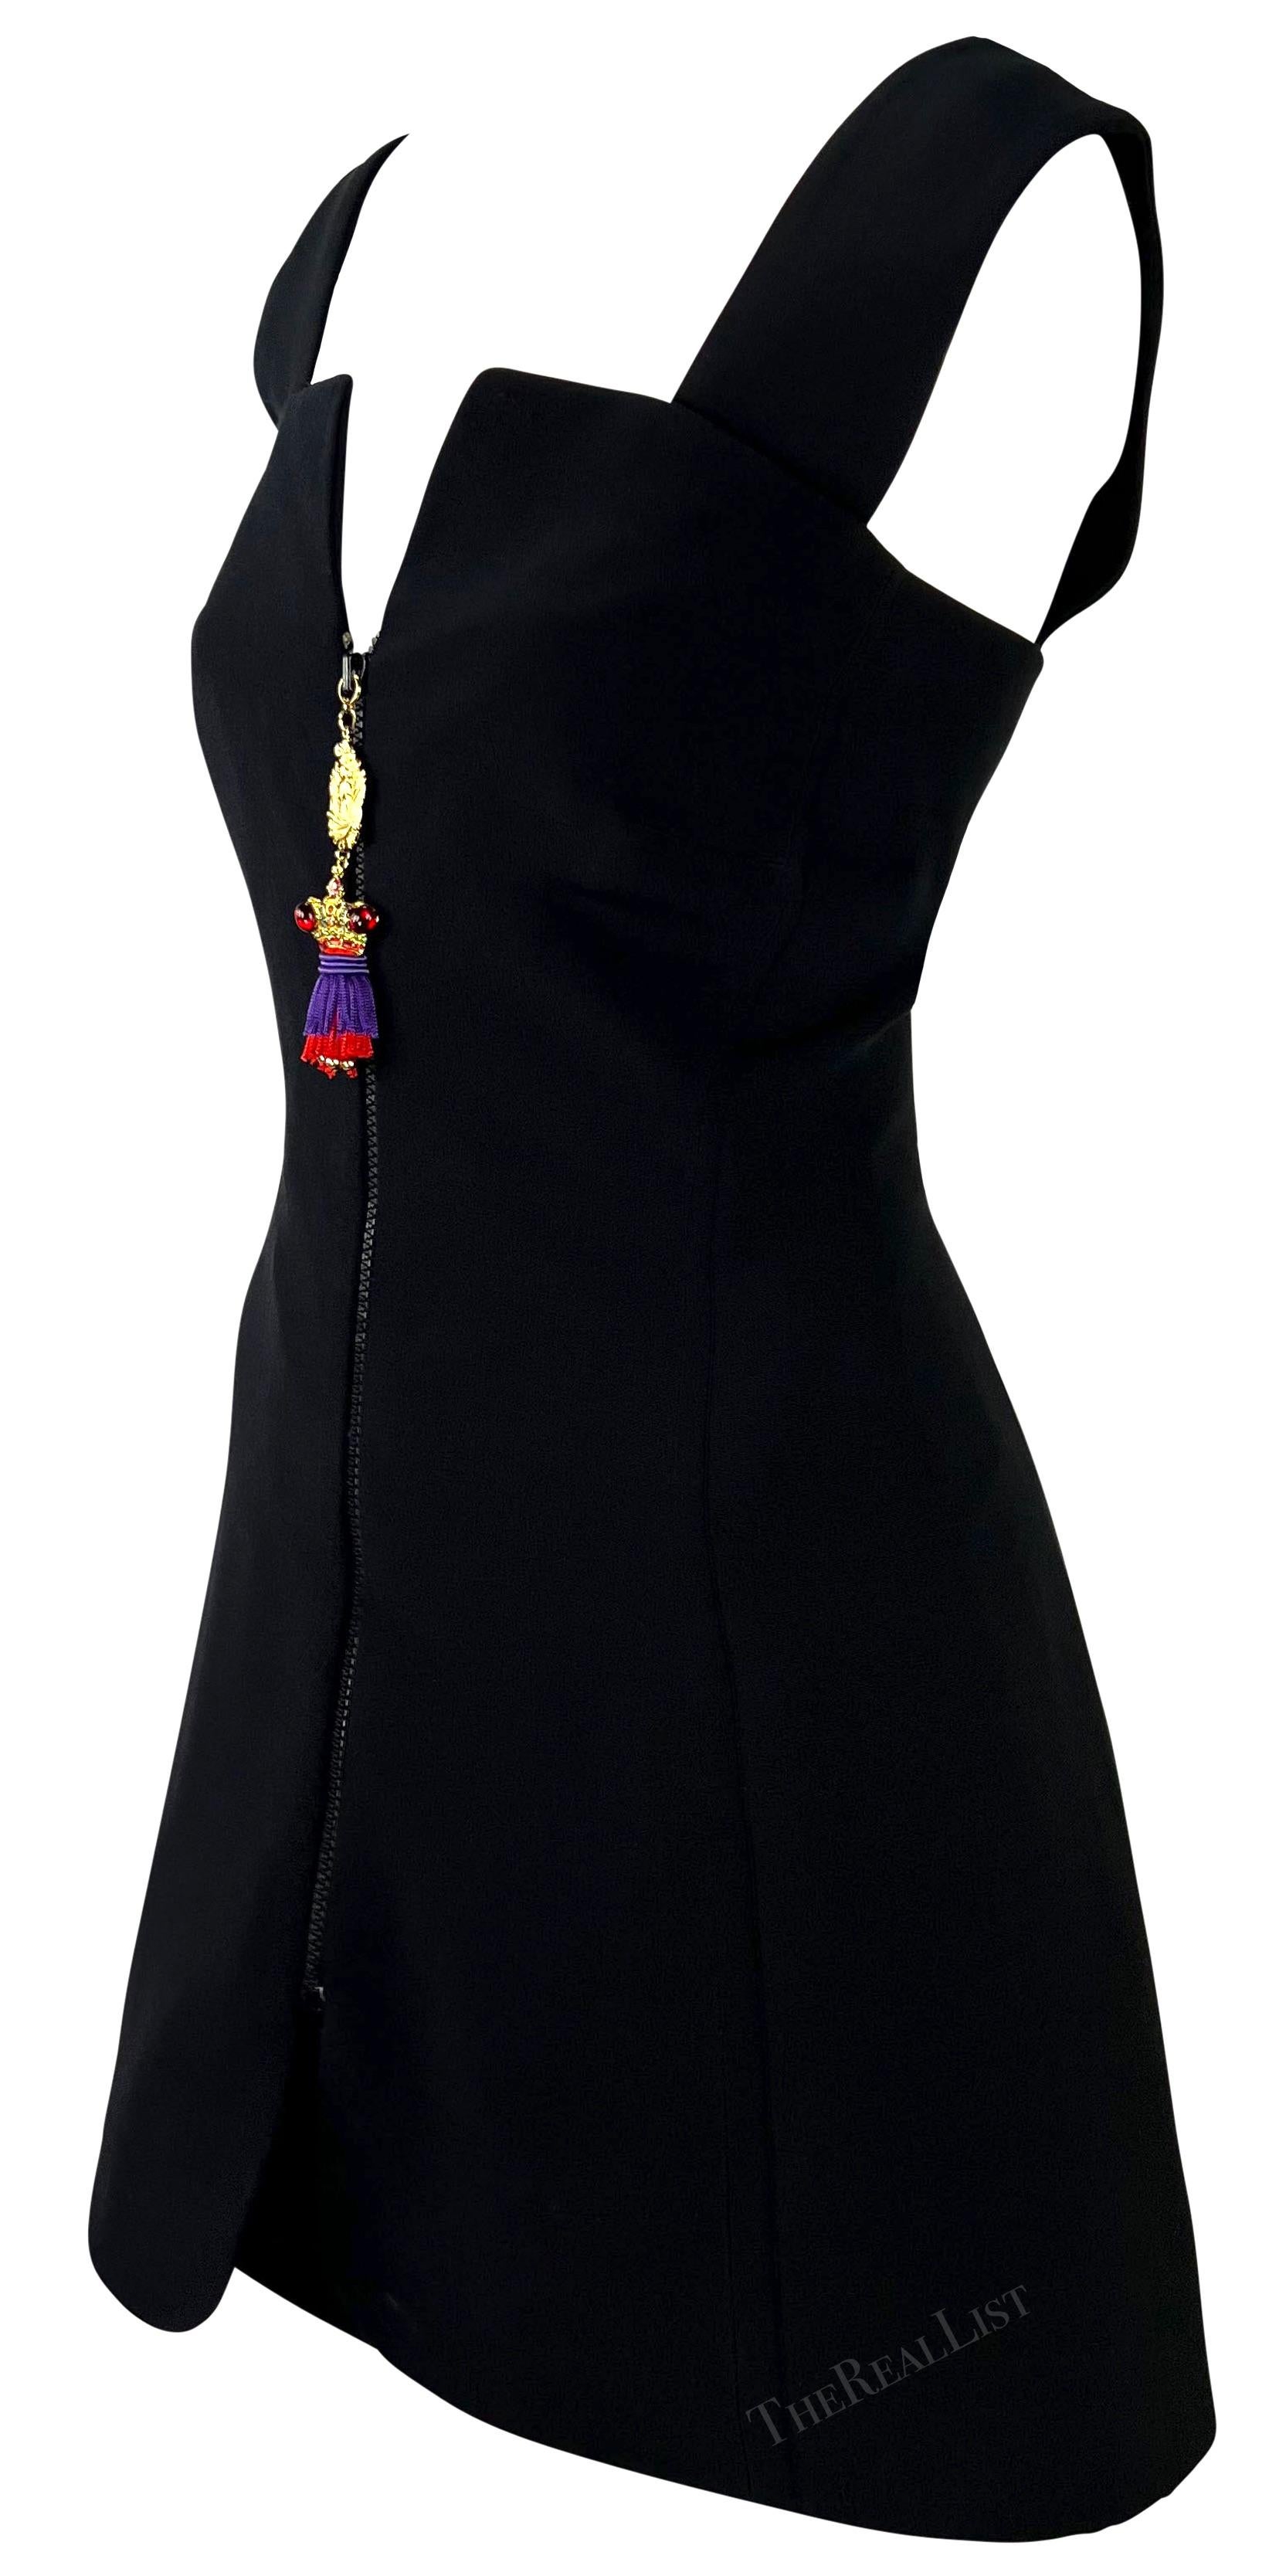 S/S 1991 Atelier Versace Haute Couture Runway Mini Dress Rhinestone Tassel Set For Sale 2